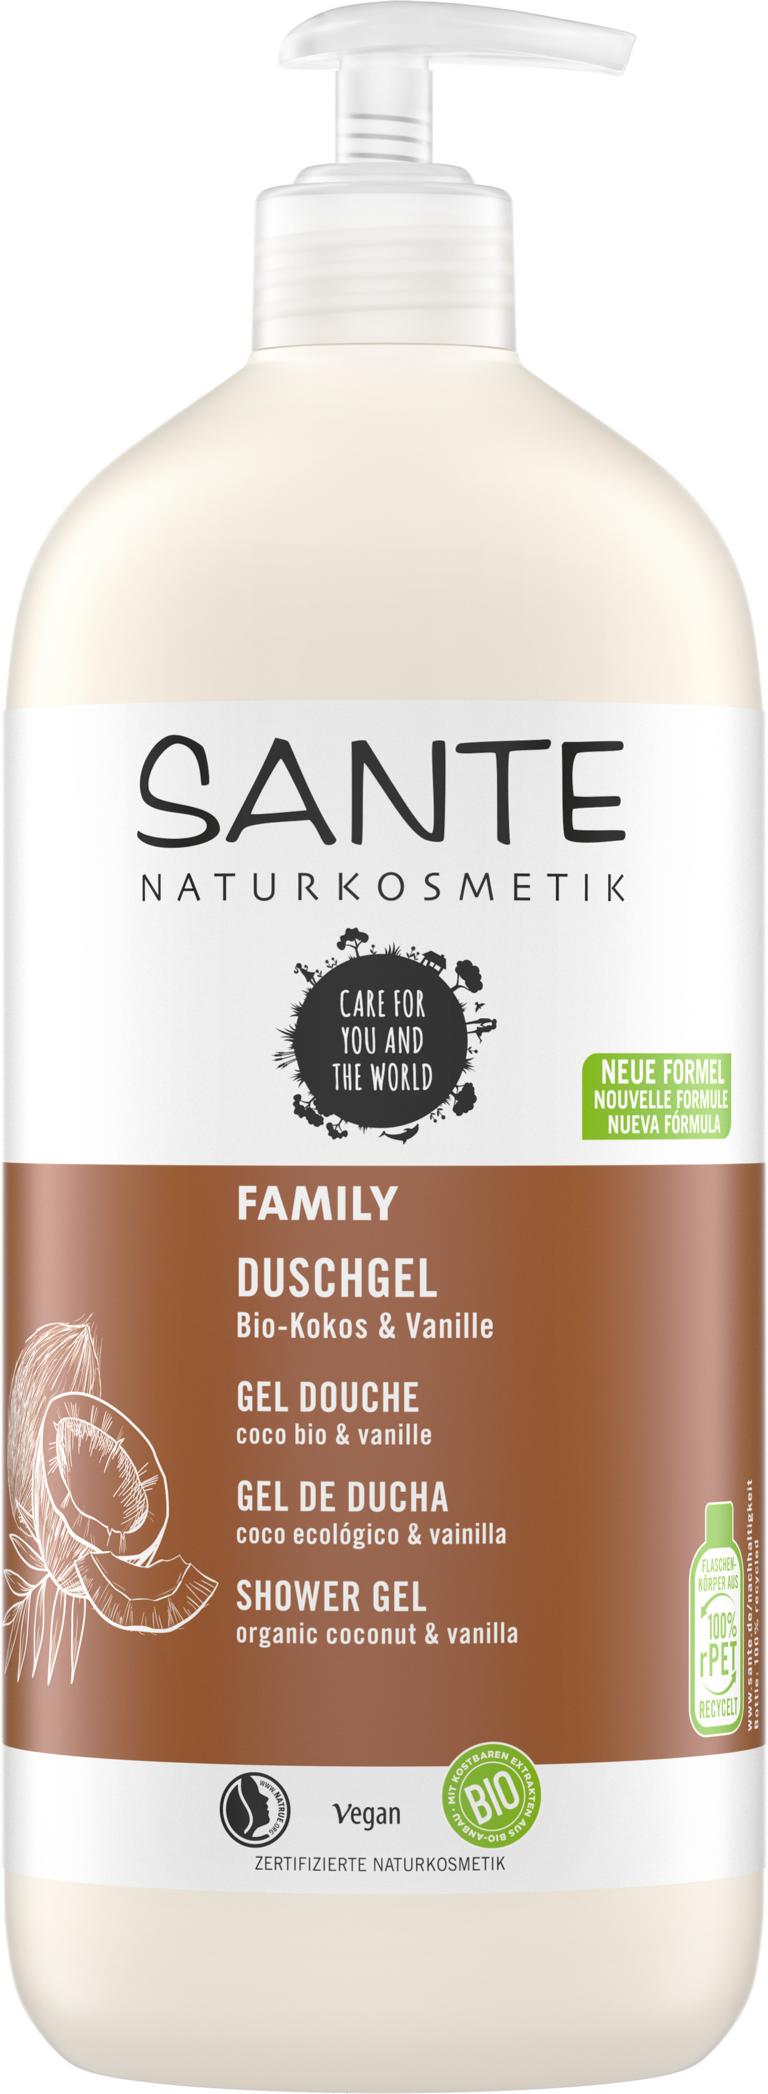 Sante FAMILY Duschgel Bio-Kokos & Vanille 950ml